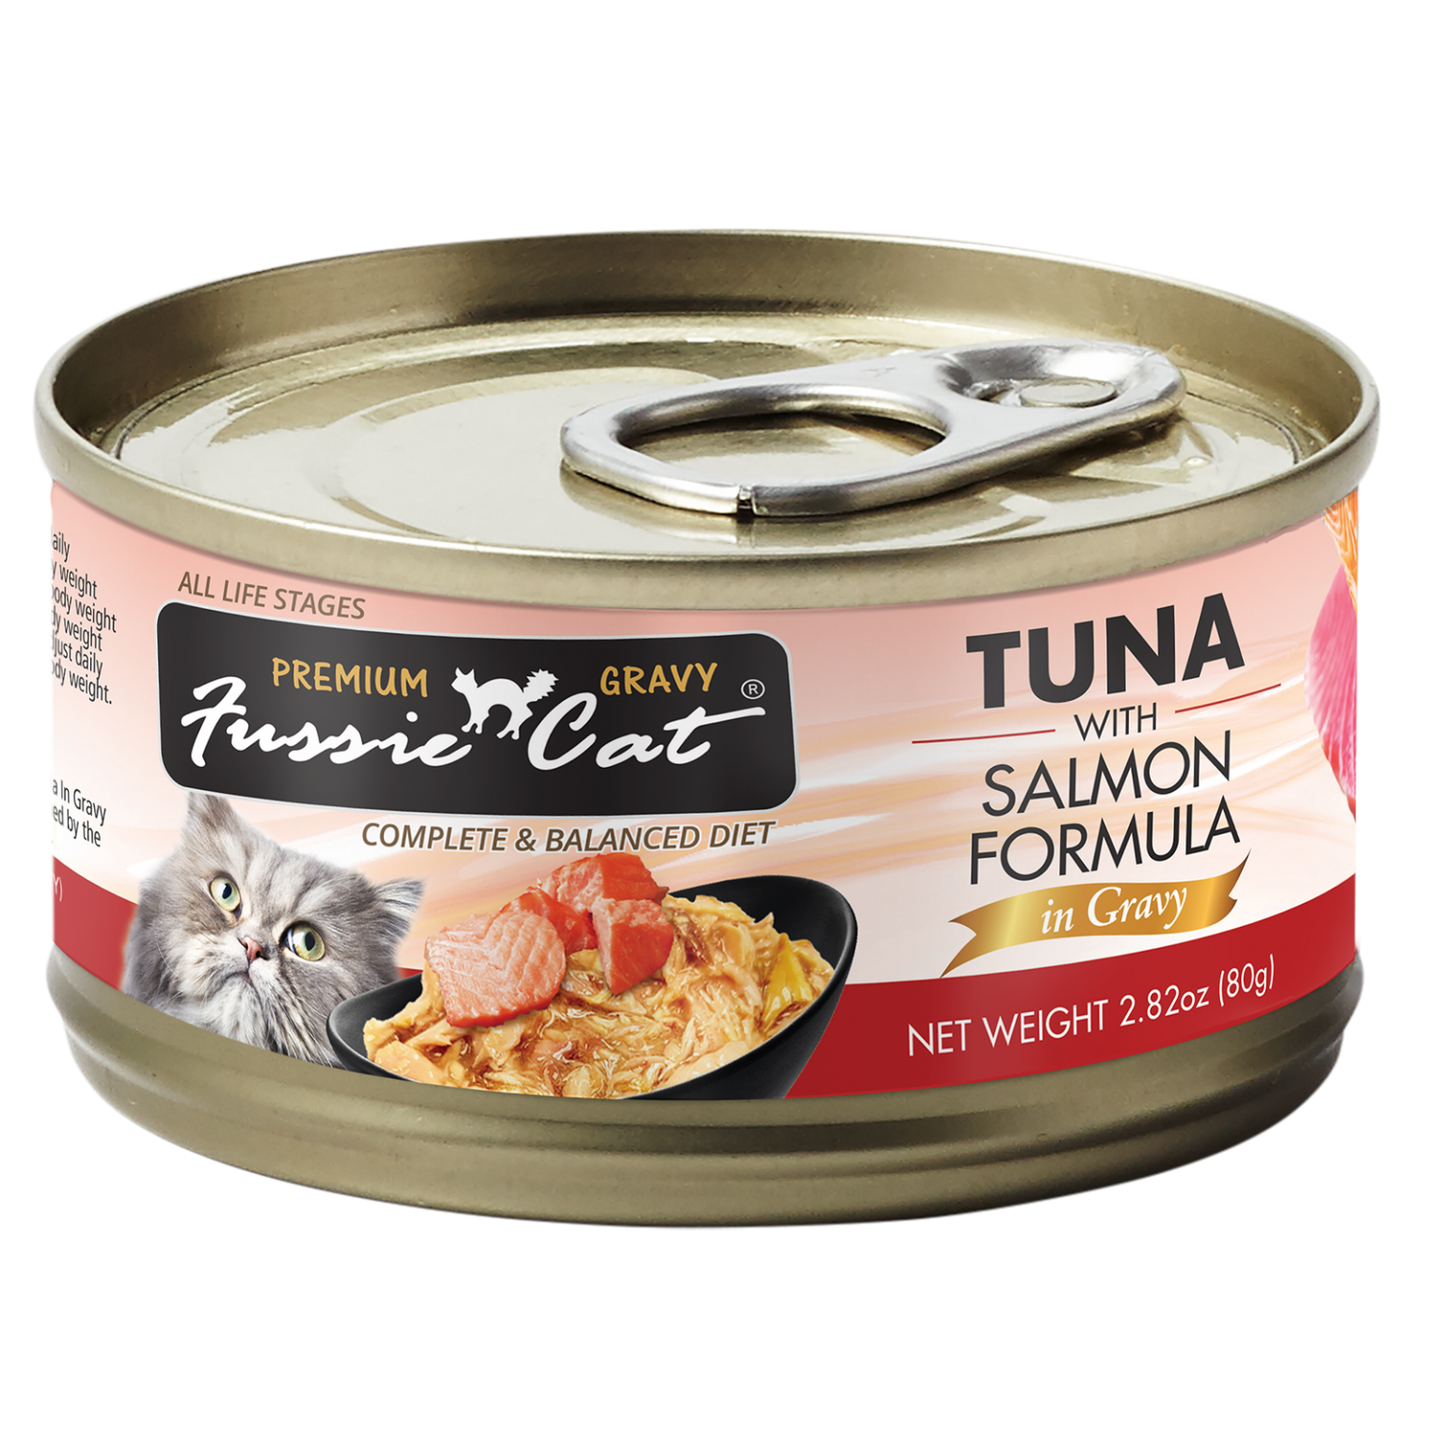 NEW Fussie Cat Tuna with Salmon in Gravy 2.8oz